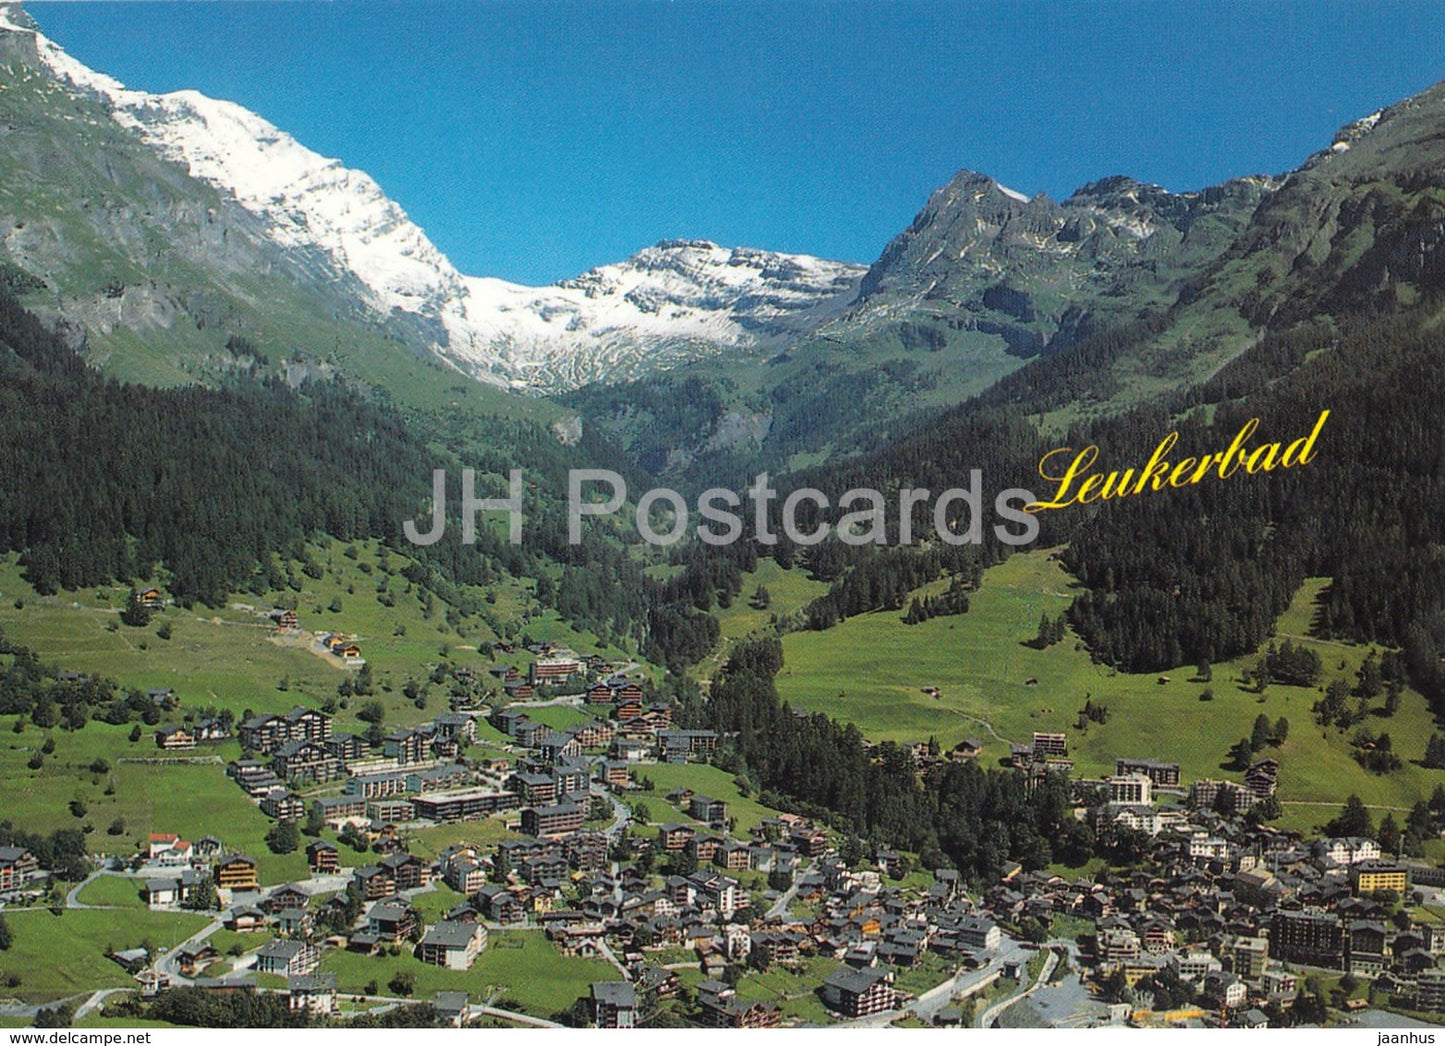 Leukerbad 1401 m - Loeche les Bains - Balmhorn - Gizzifurgge - Ferdenrothorn - 50715 - 1997 - Switzerland - used - JH Postcards